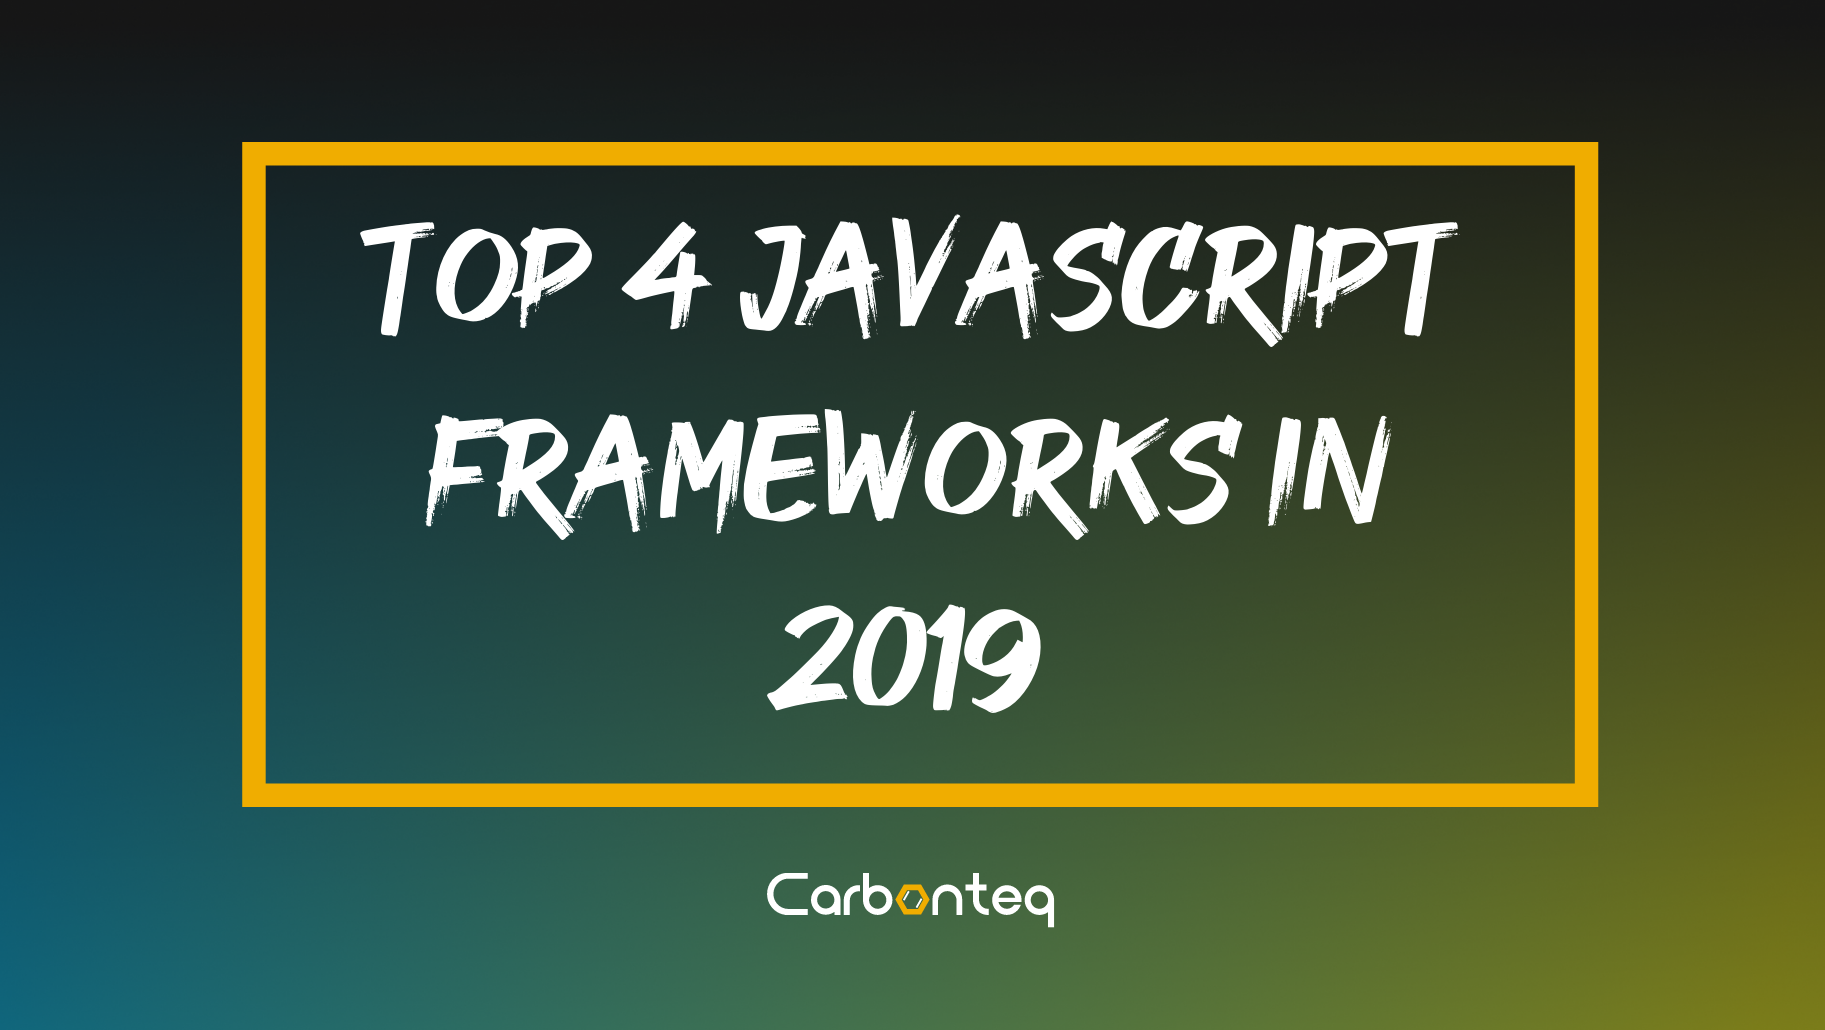 Top 4 JavaScript Frameworks In 2019